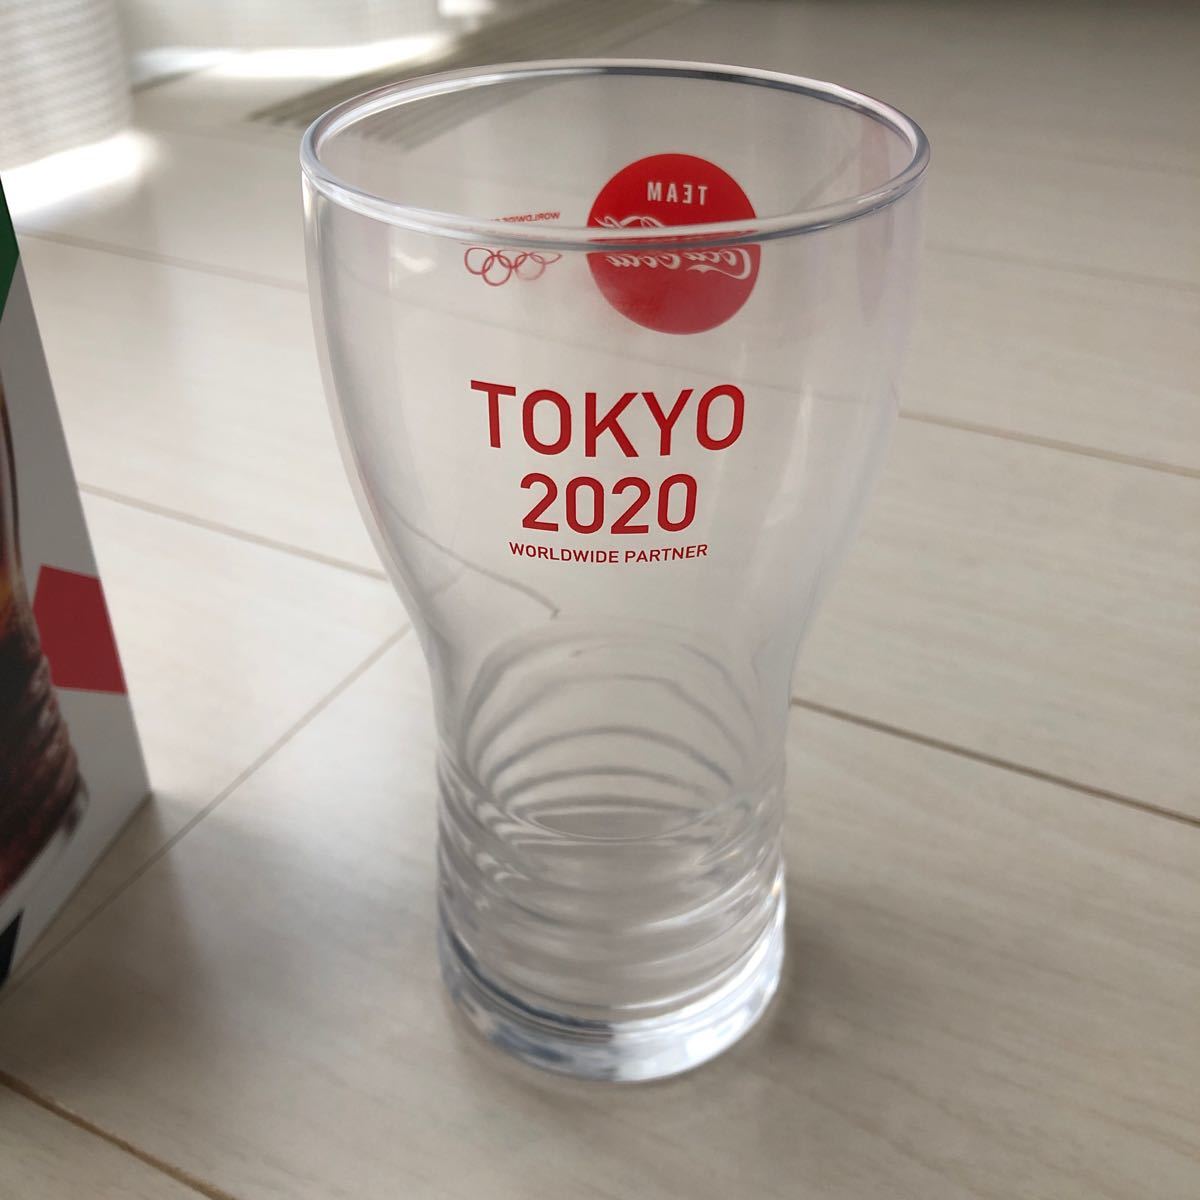  Coca Cola Tokyo Olympic память стакан Coca-Cola стакан 